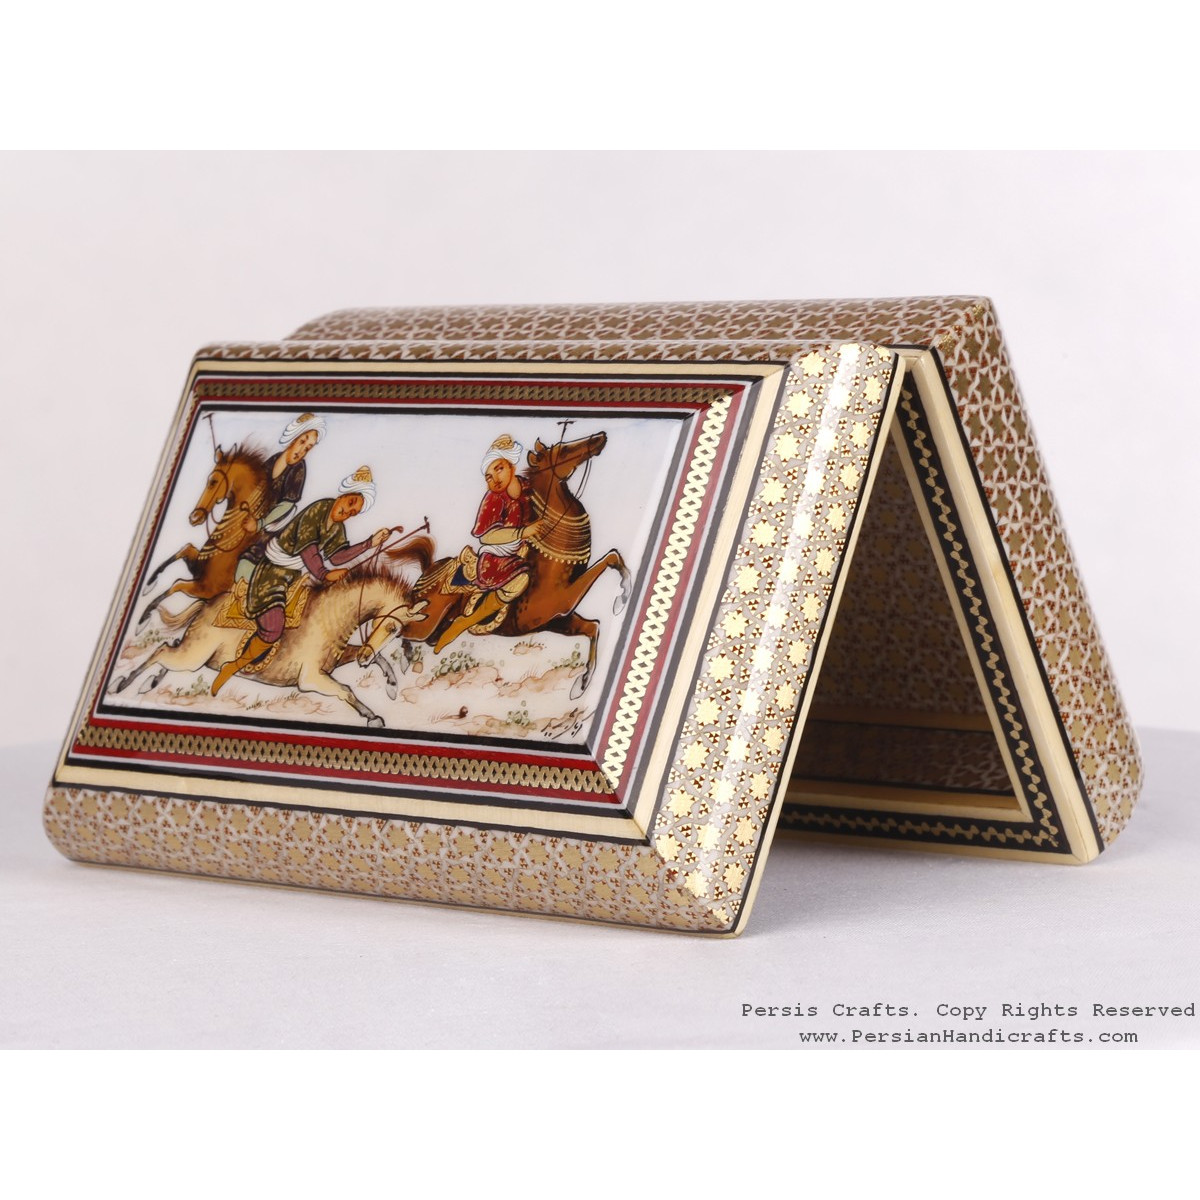 Khatam Jewelry Box with Miniature Chogan Painting - HKH3601-Persian Handicrafts